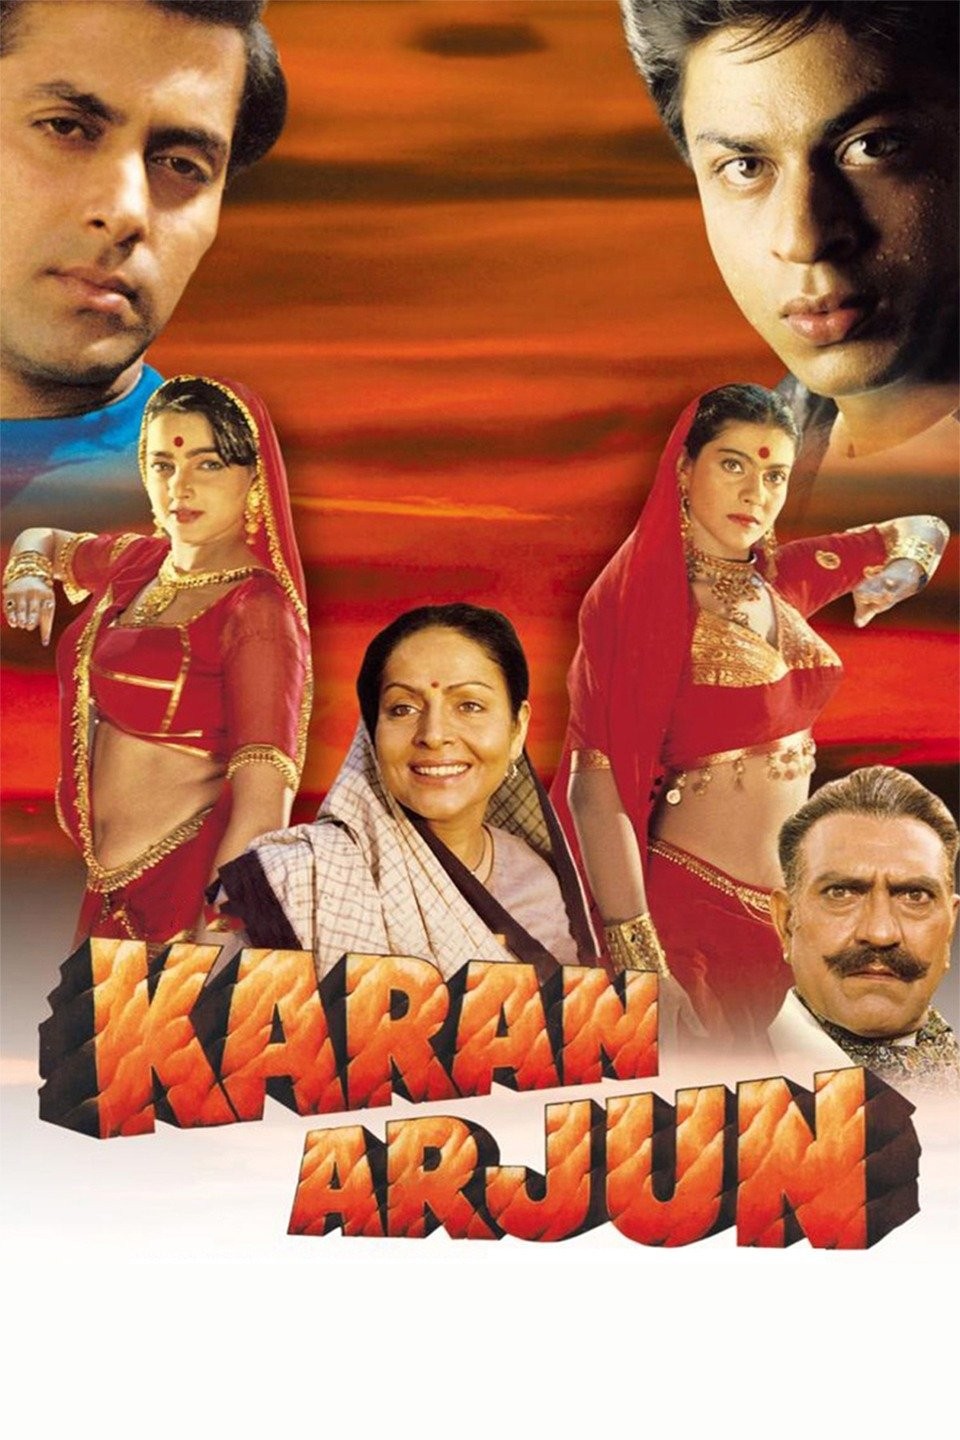 Karan arjun film full movie